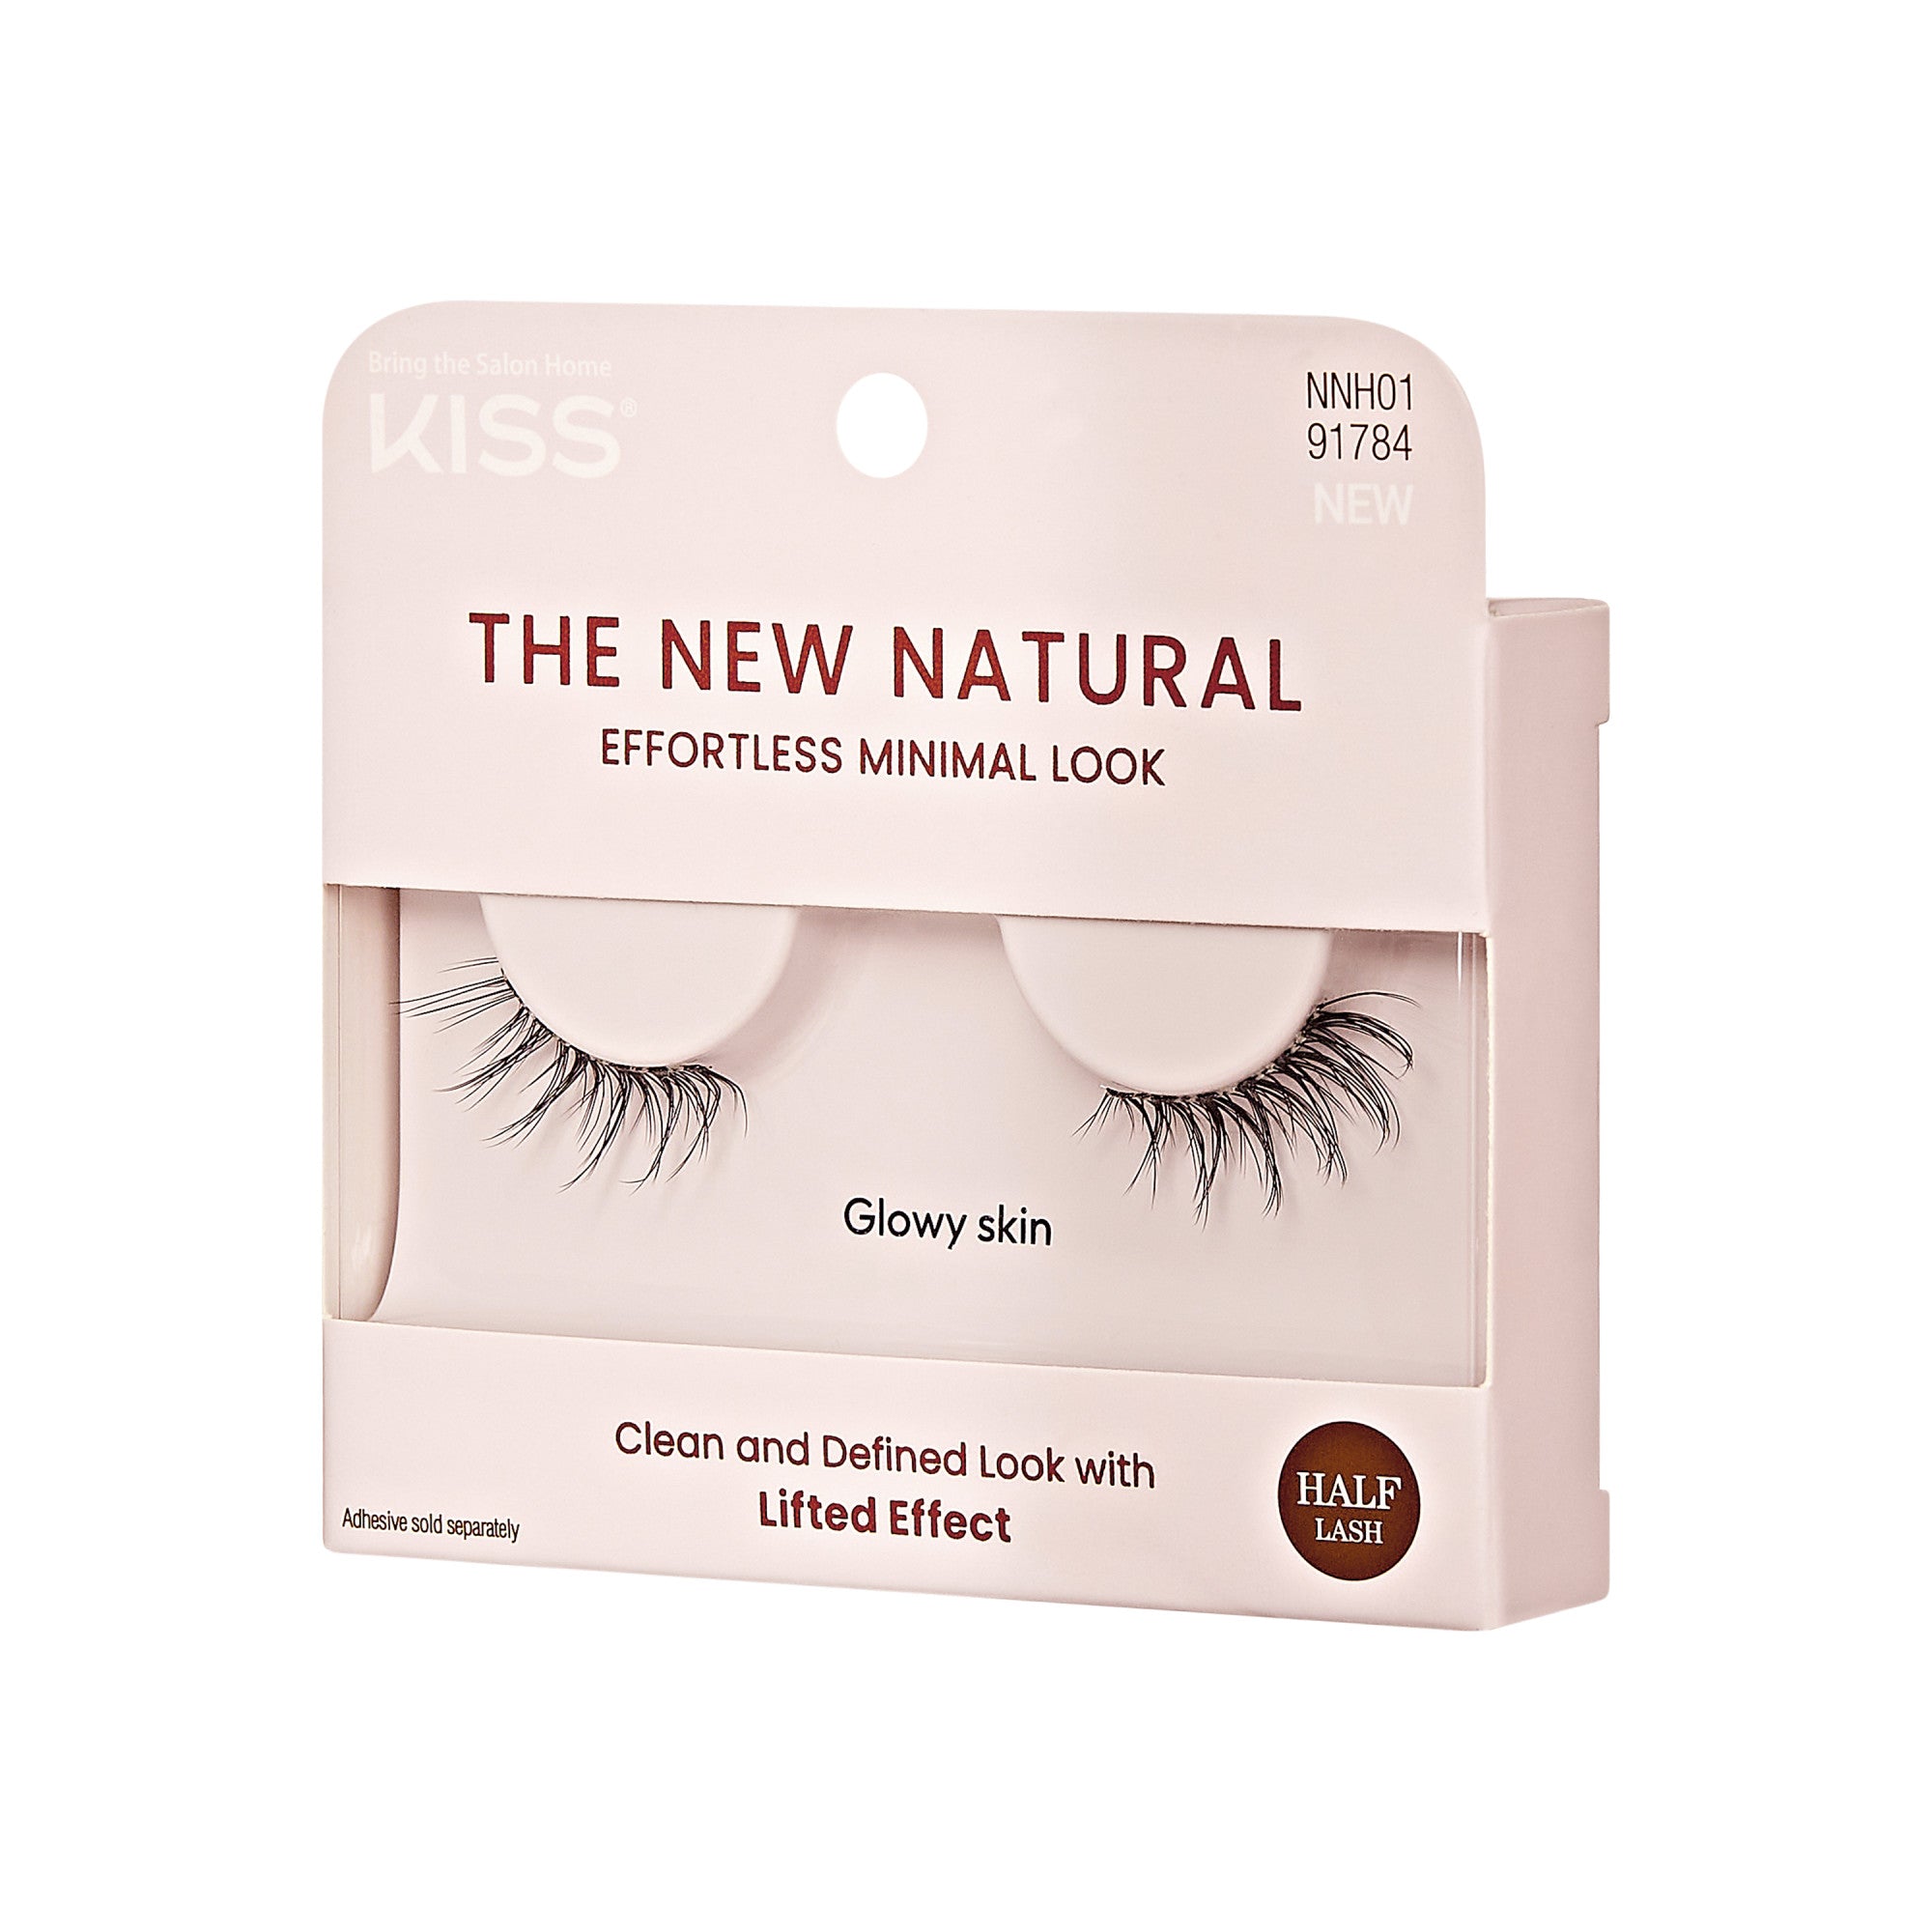 KISS The New Natural - Half Lash - Glowy Skin